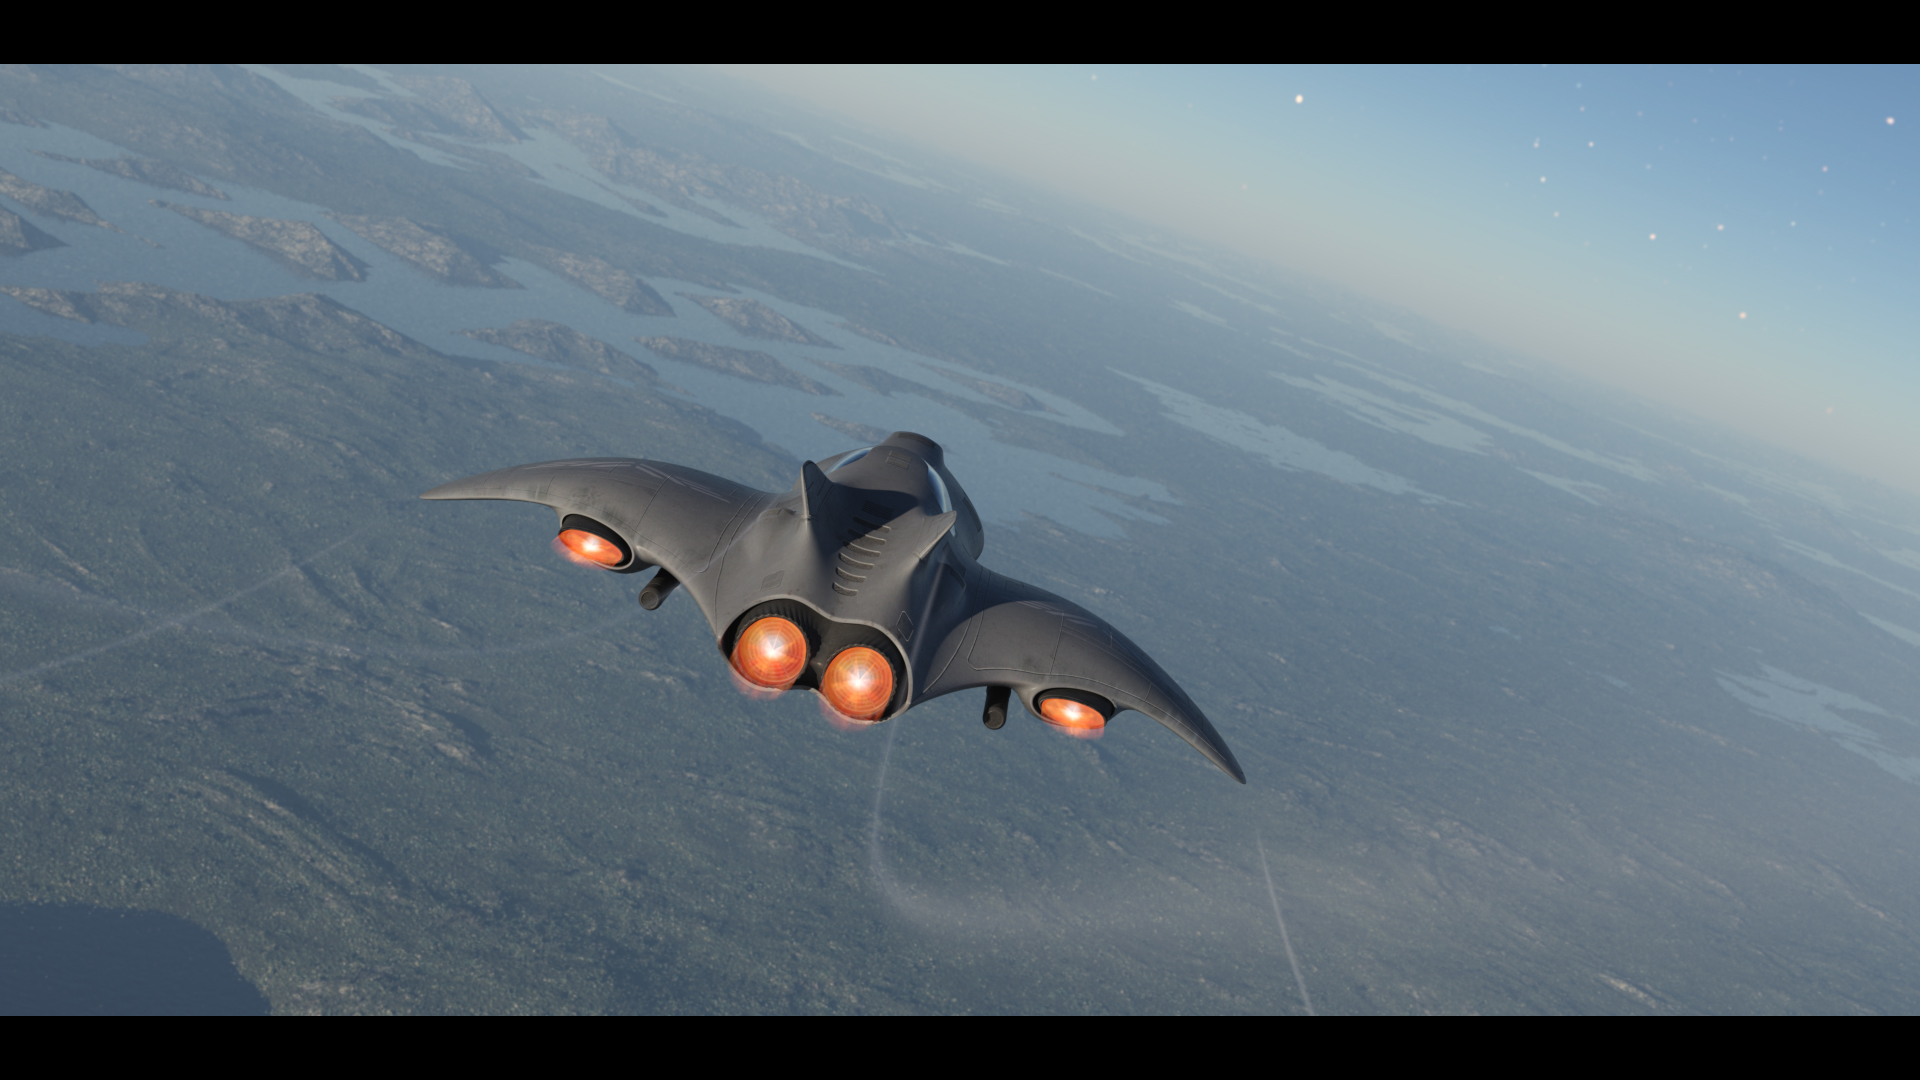 FM Starfighter I by: Flipmode, 3D Models by Daz 3D